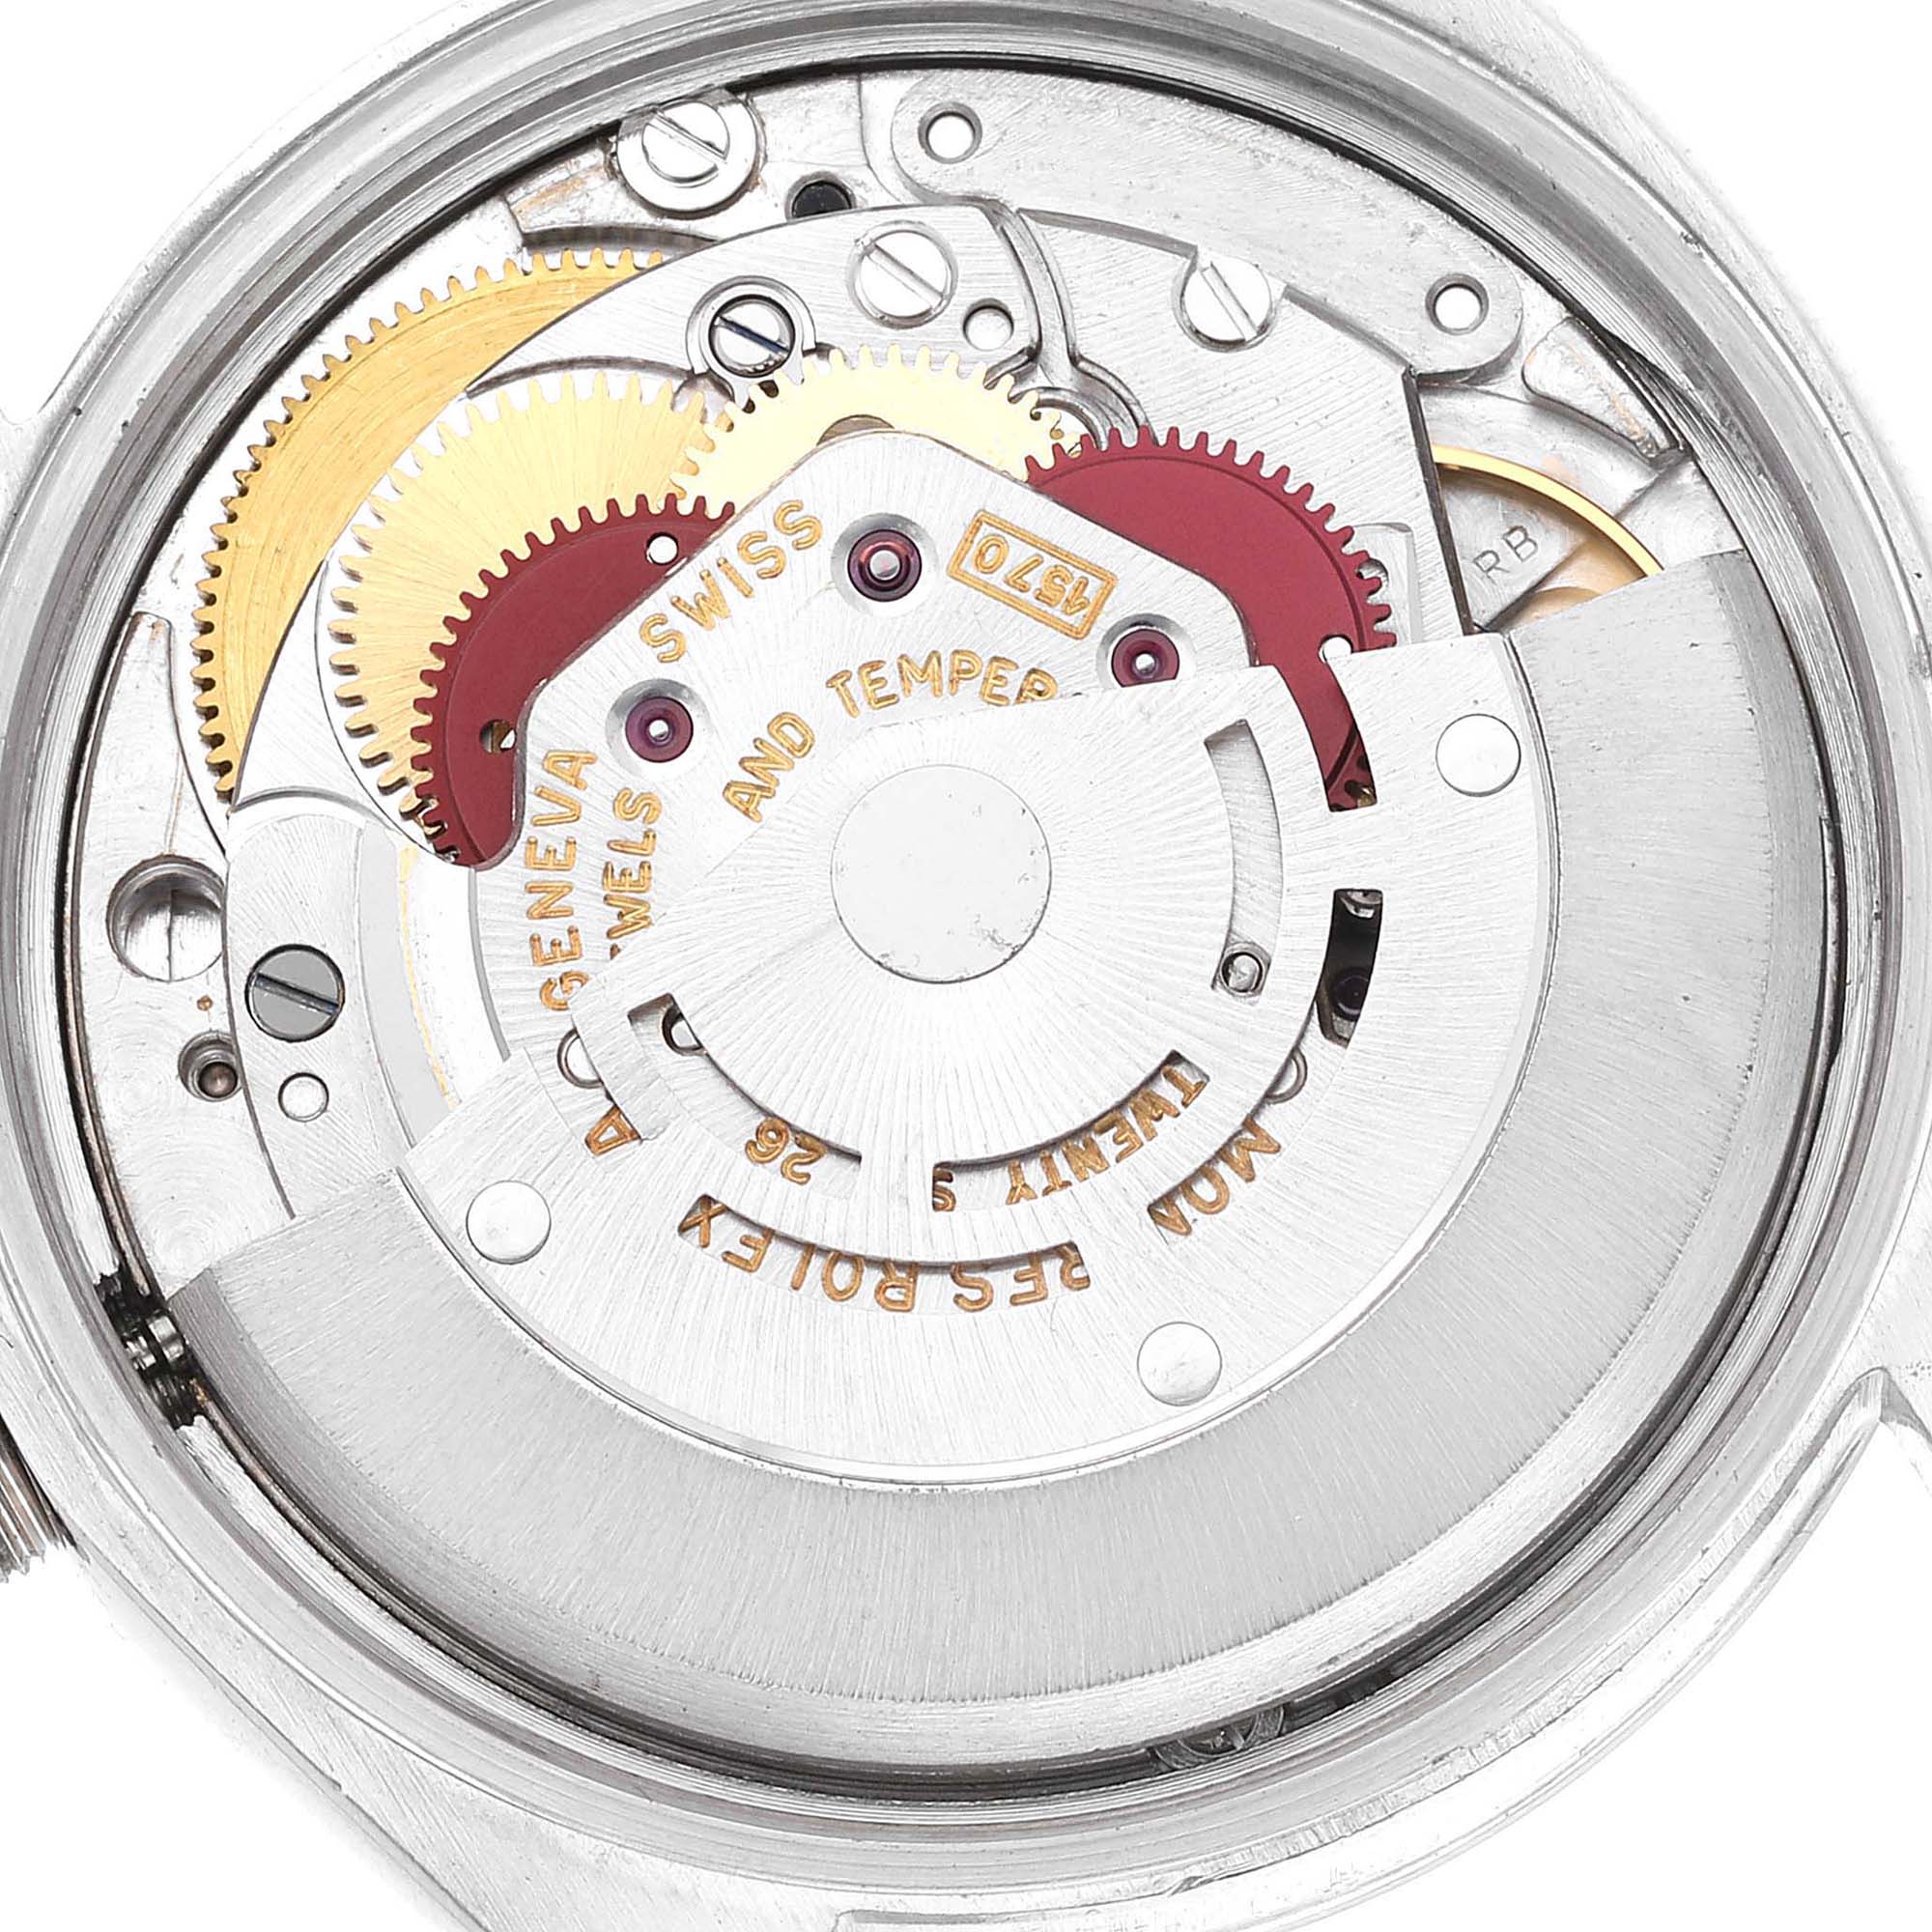 Rolex Date Smooth Bezel Black Dial Steel Vintage Men's Watch 1500 35 Mm